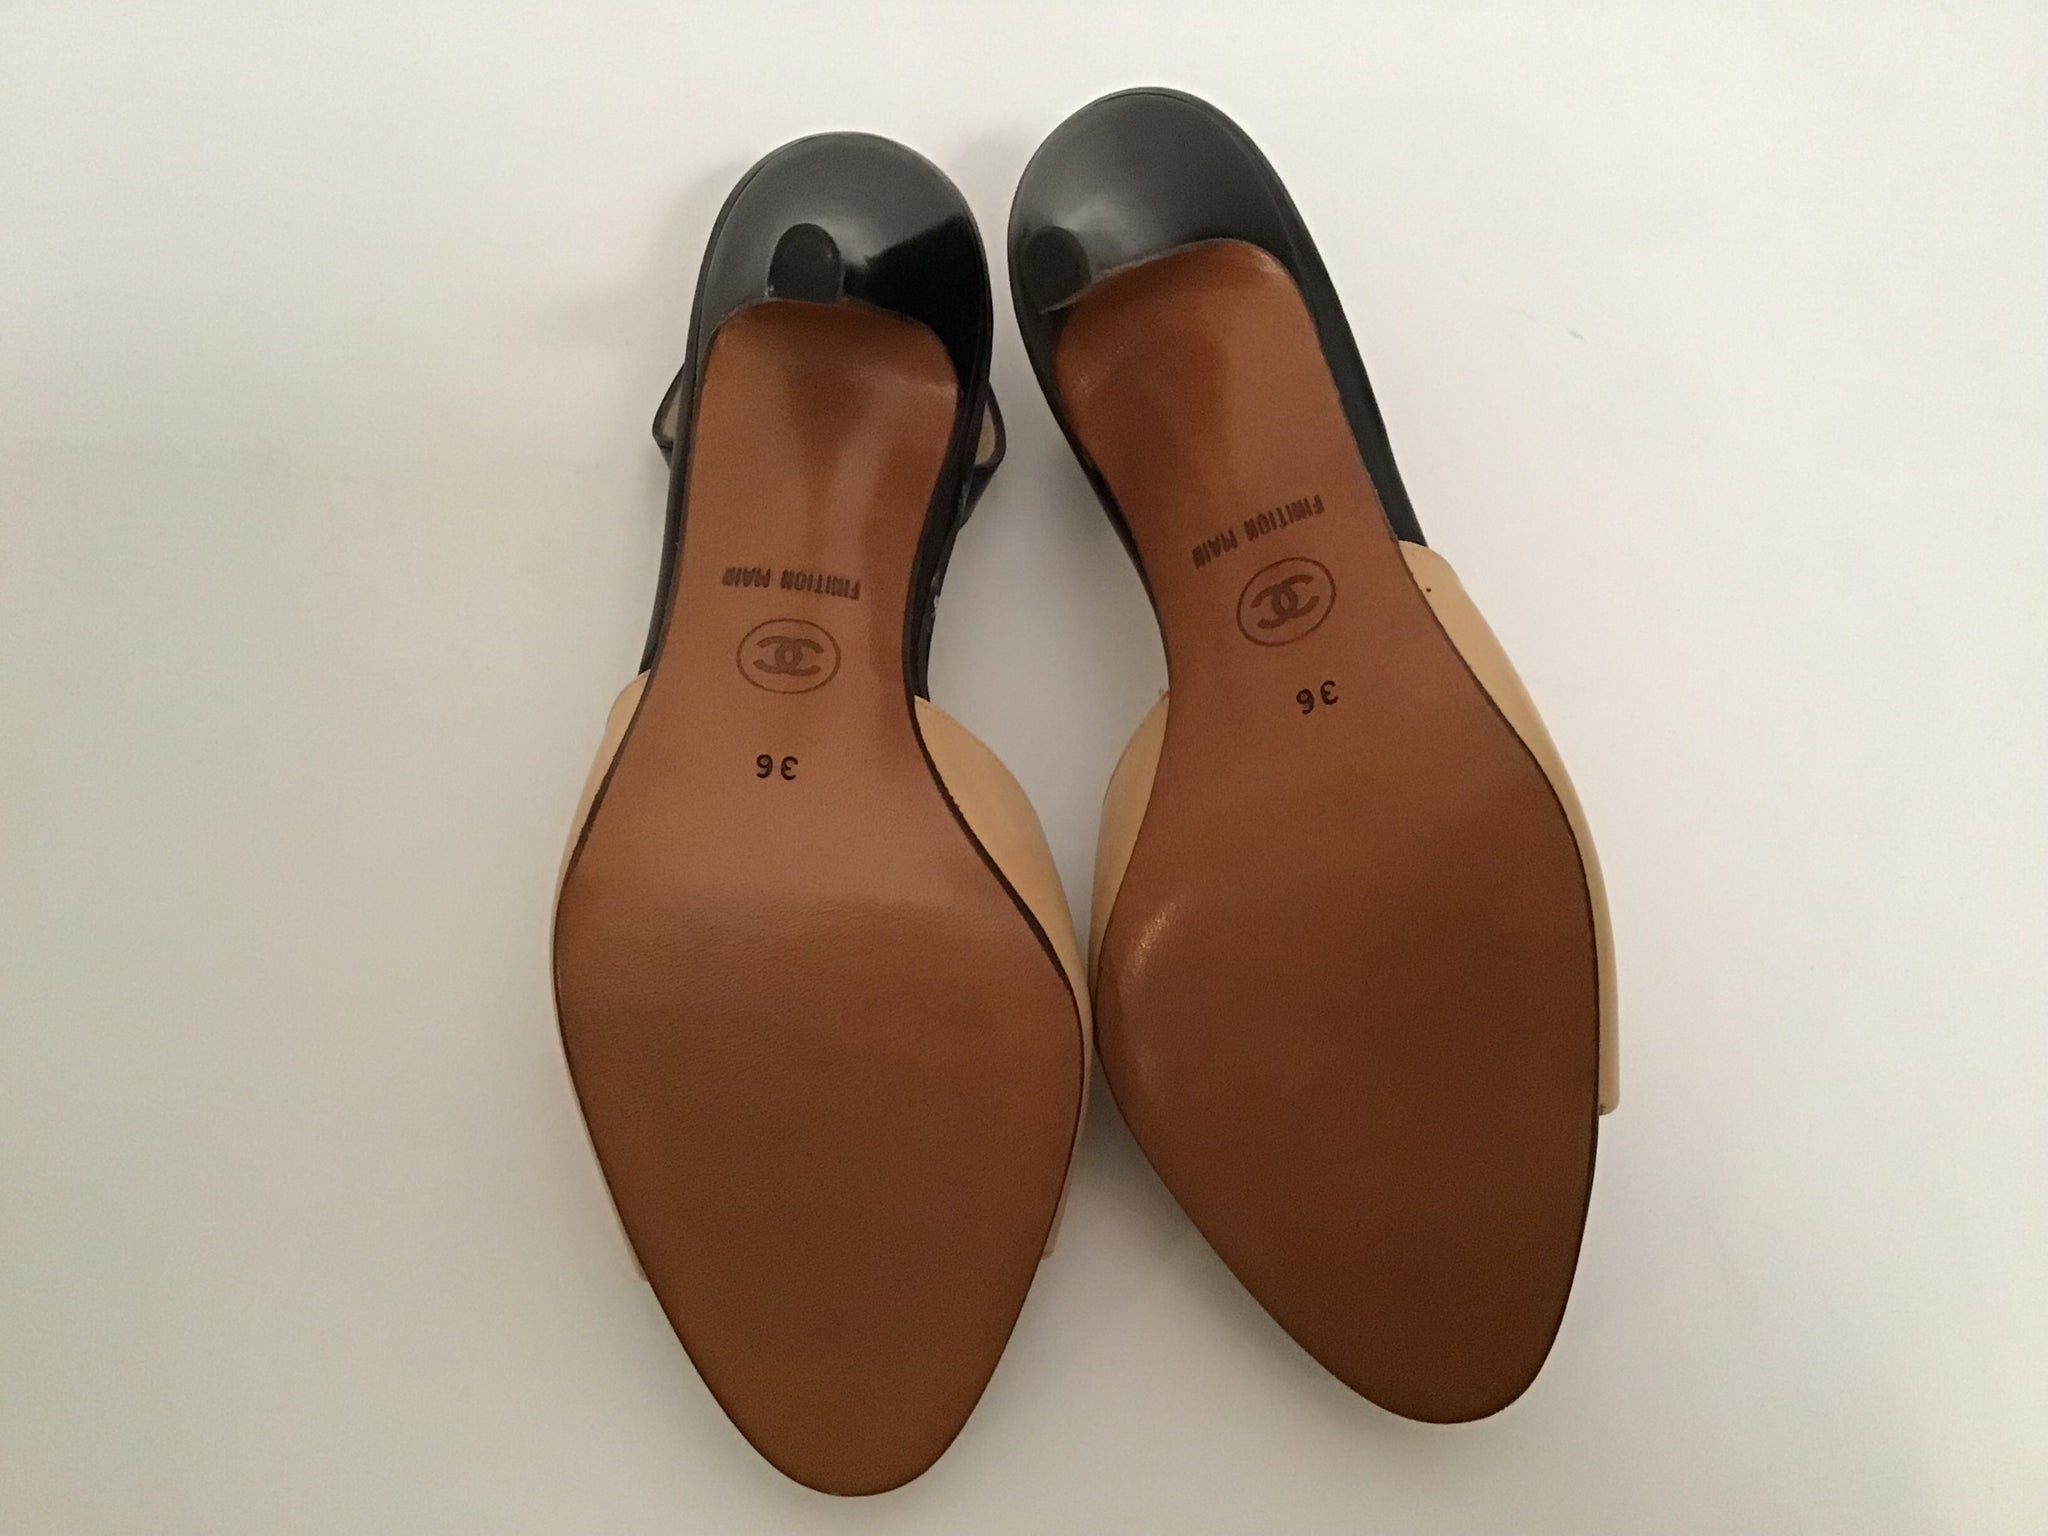 Celine D'Orsay Pumps Black Suede Size 38.5 Pointed Toe Heels